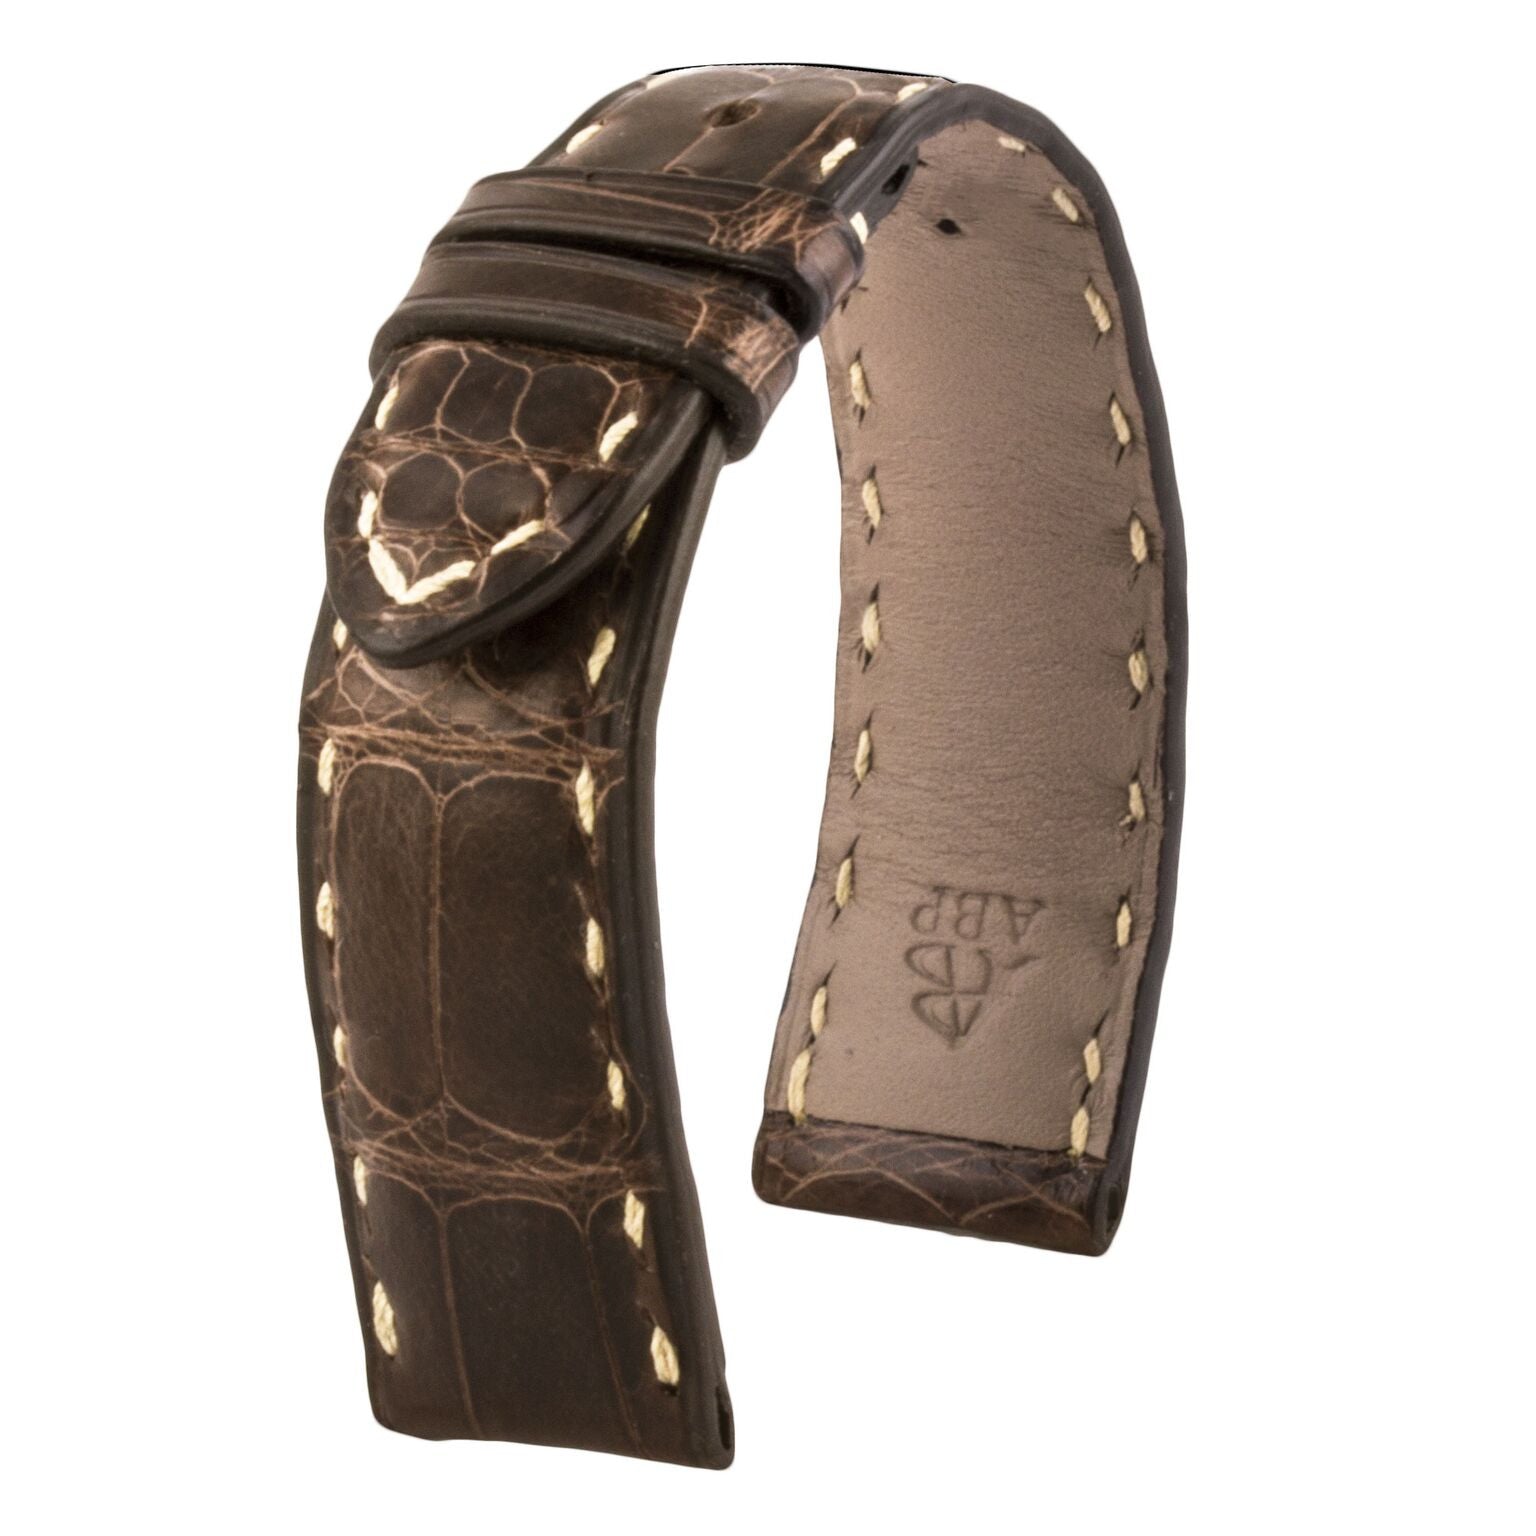 Omega Constellation - Bracelet montre cuir - Alligator tannage spécial marron chocolat waxé - watch band leather strap - ABP Concept -